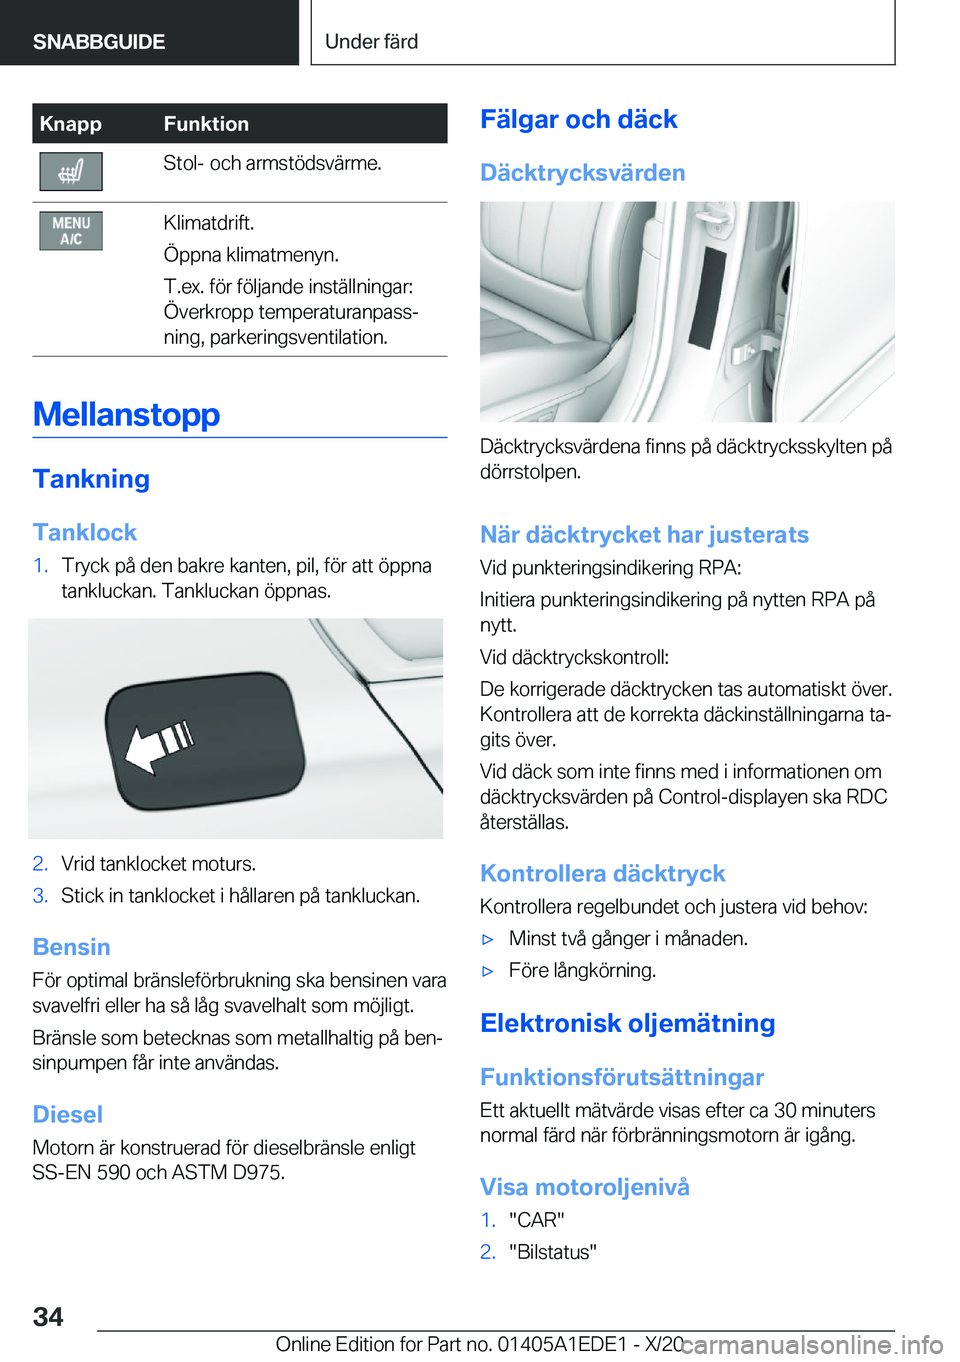 BMW 8 SERIES CONVERTIBLE 2021  InstruktionsbÖcker (in Swedish) �K�n�a�p�p�F�u�n�k�t�i�o�n�S�t�o�l�-��o�c�h��a�r�m�s�t�